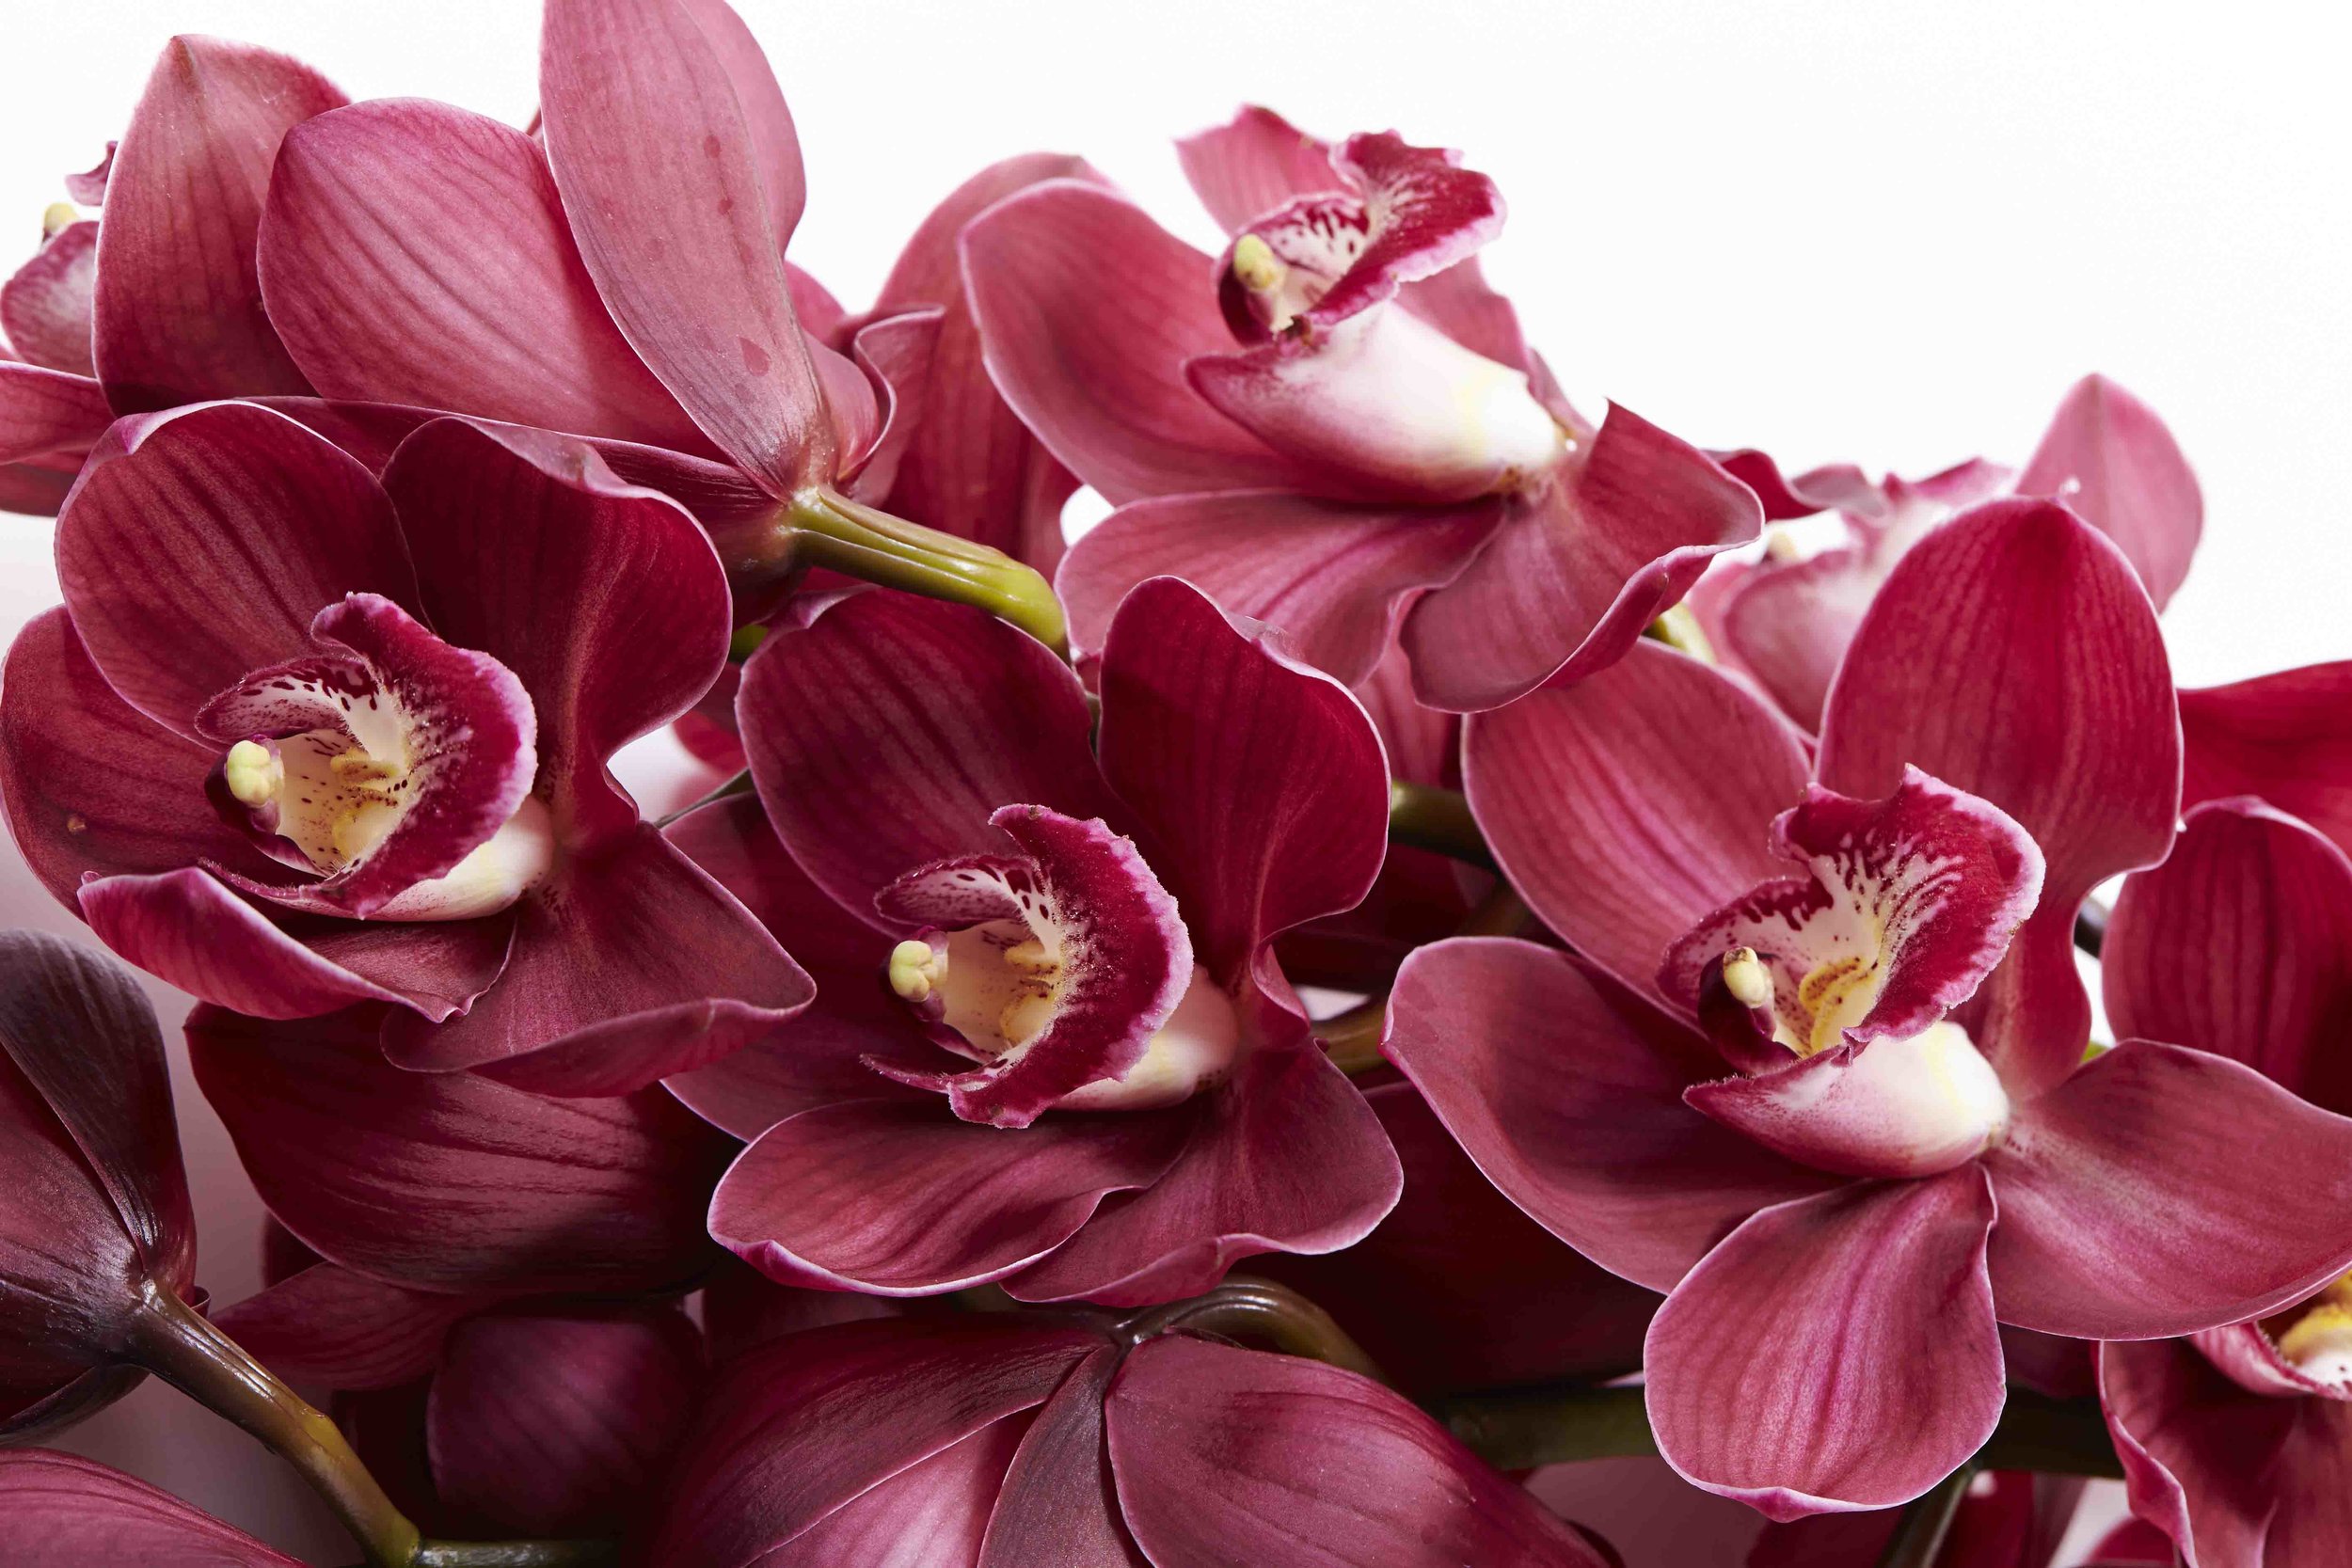 Cymbidum Orchids.jpg